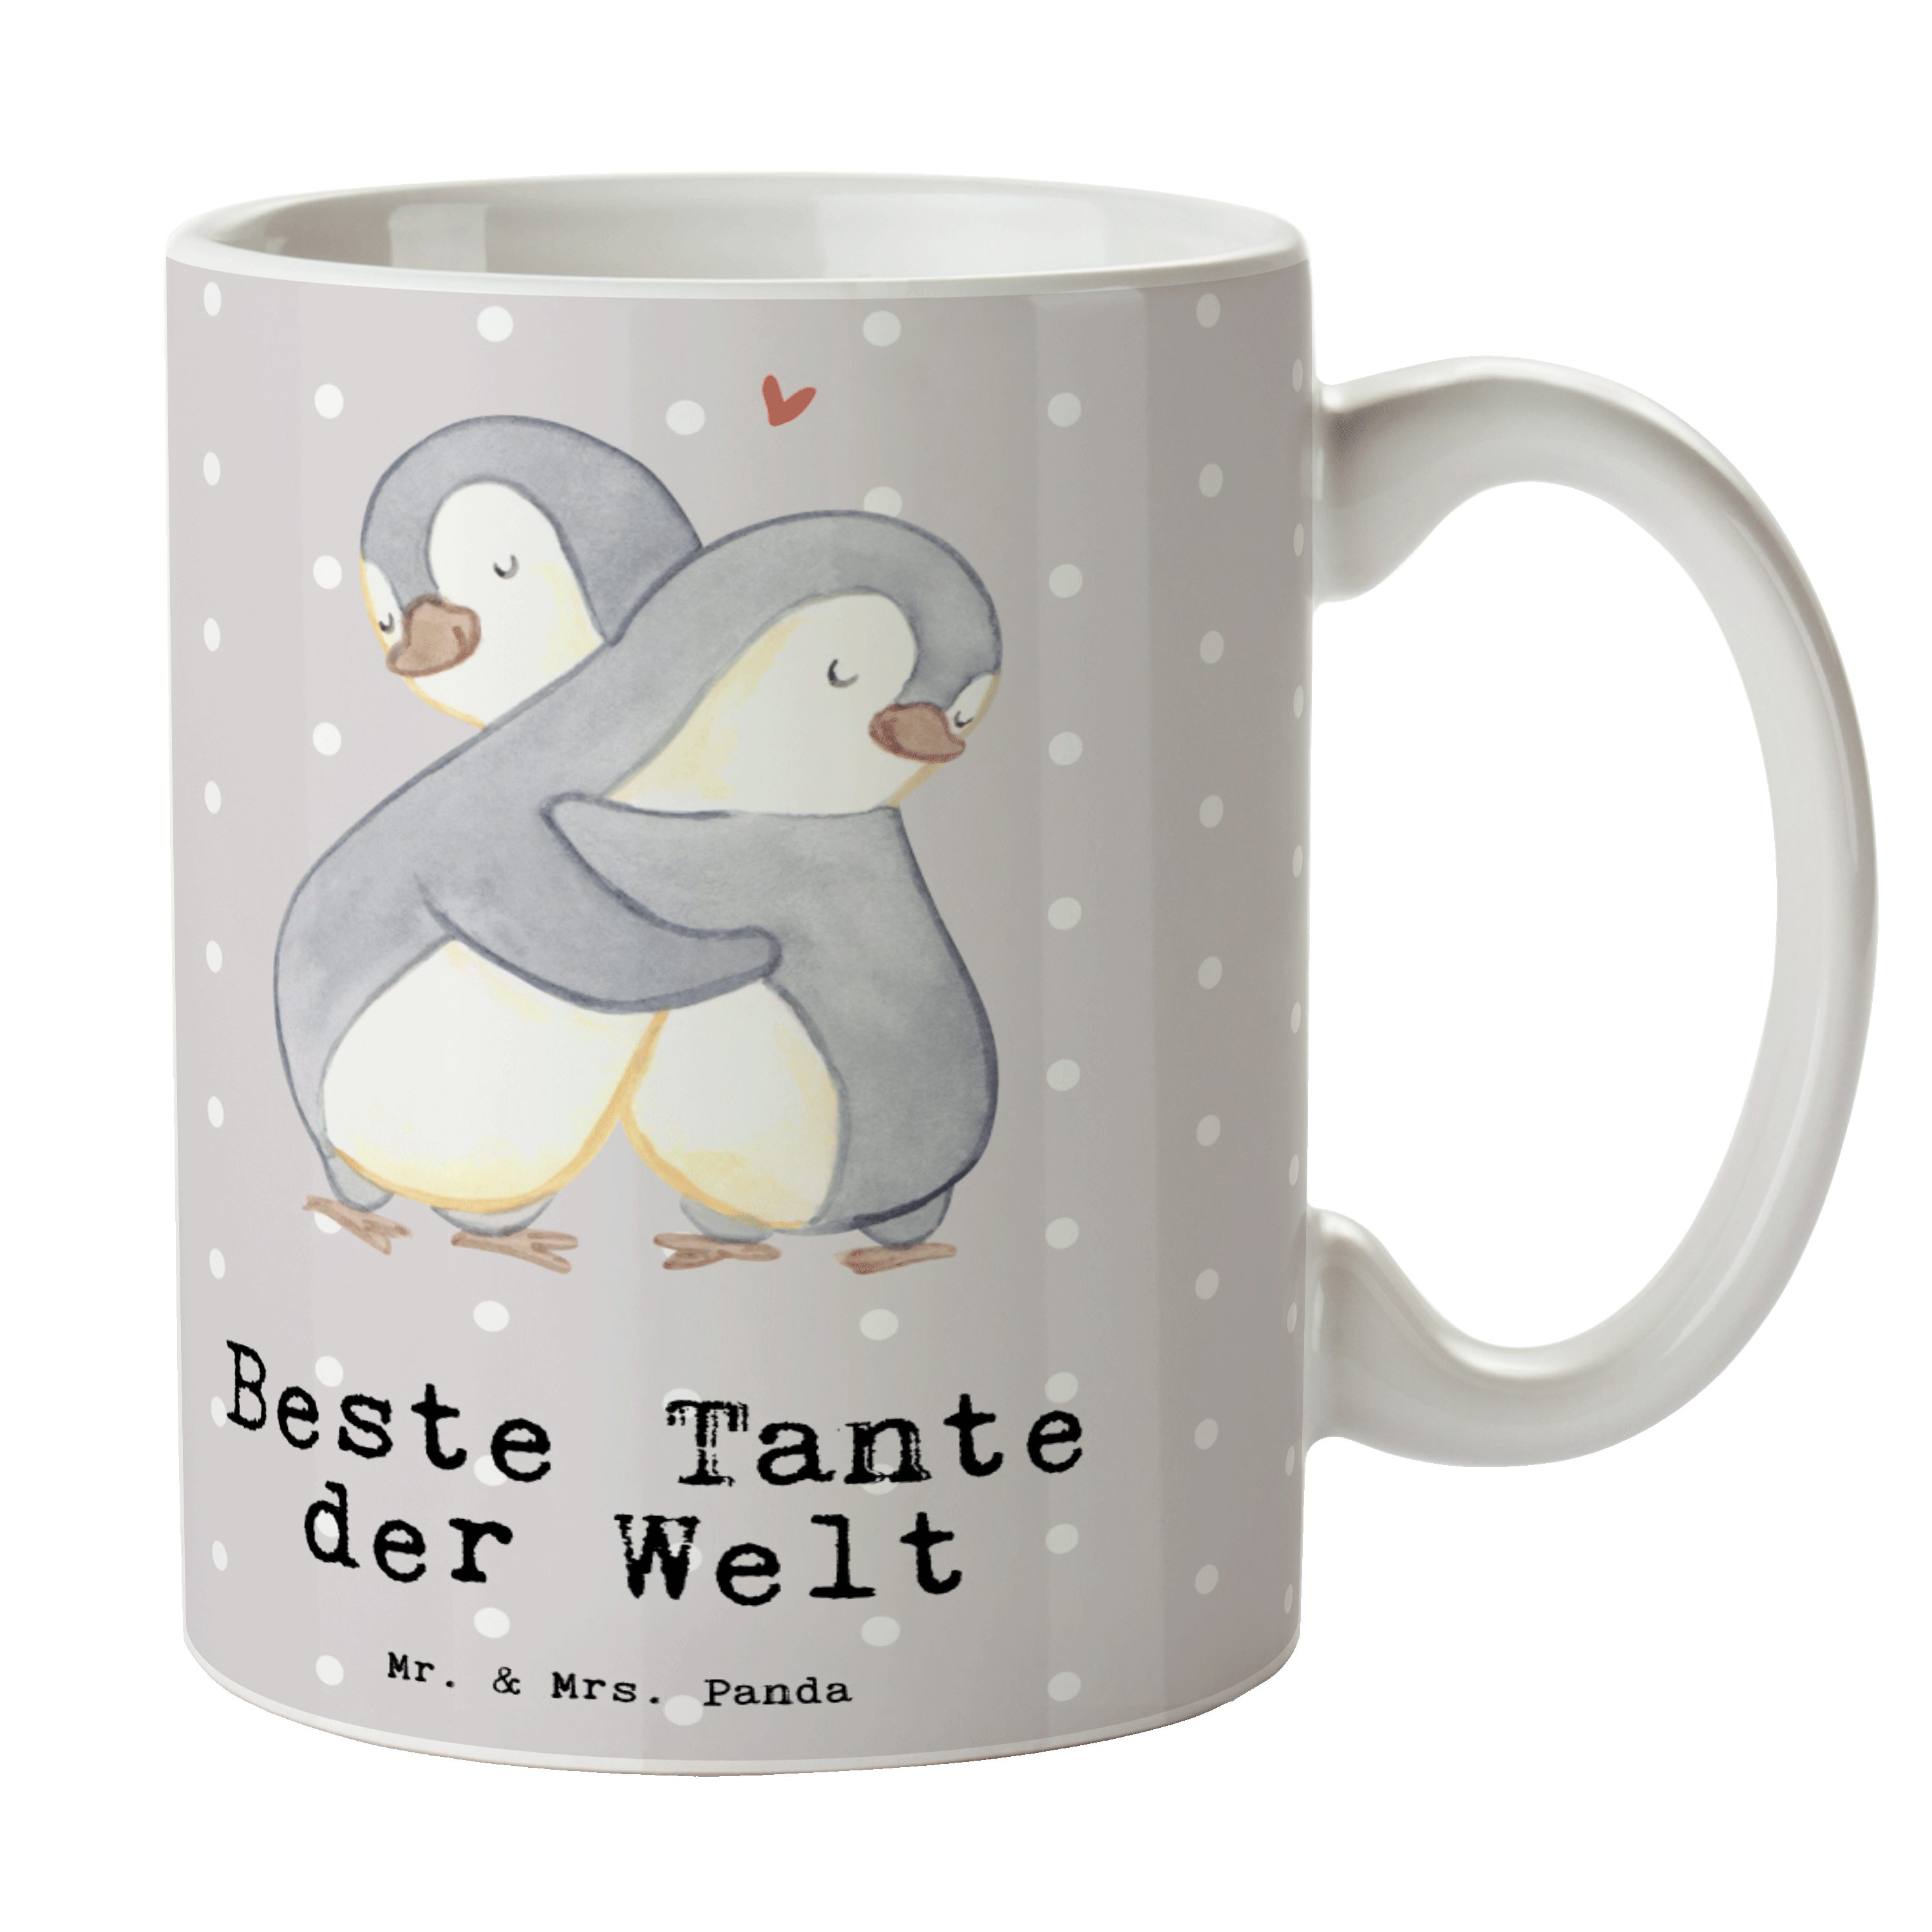 Mr. & Mrs. Panda Tasse Pinguin Beste Tante der Welt - Grau Pastell - Geschenk, Paten Tante, Keramik